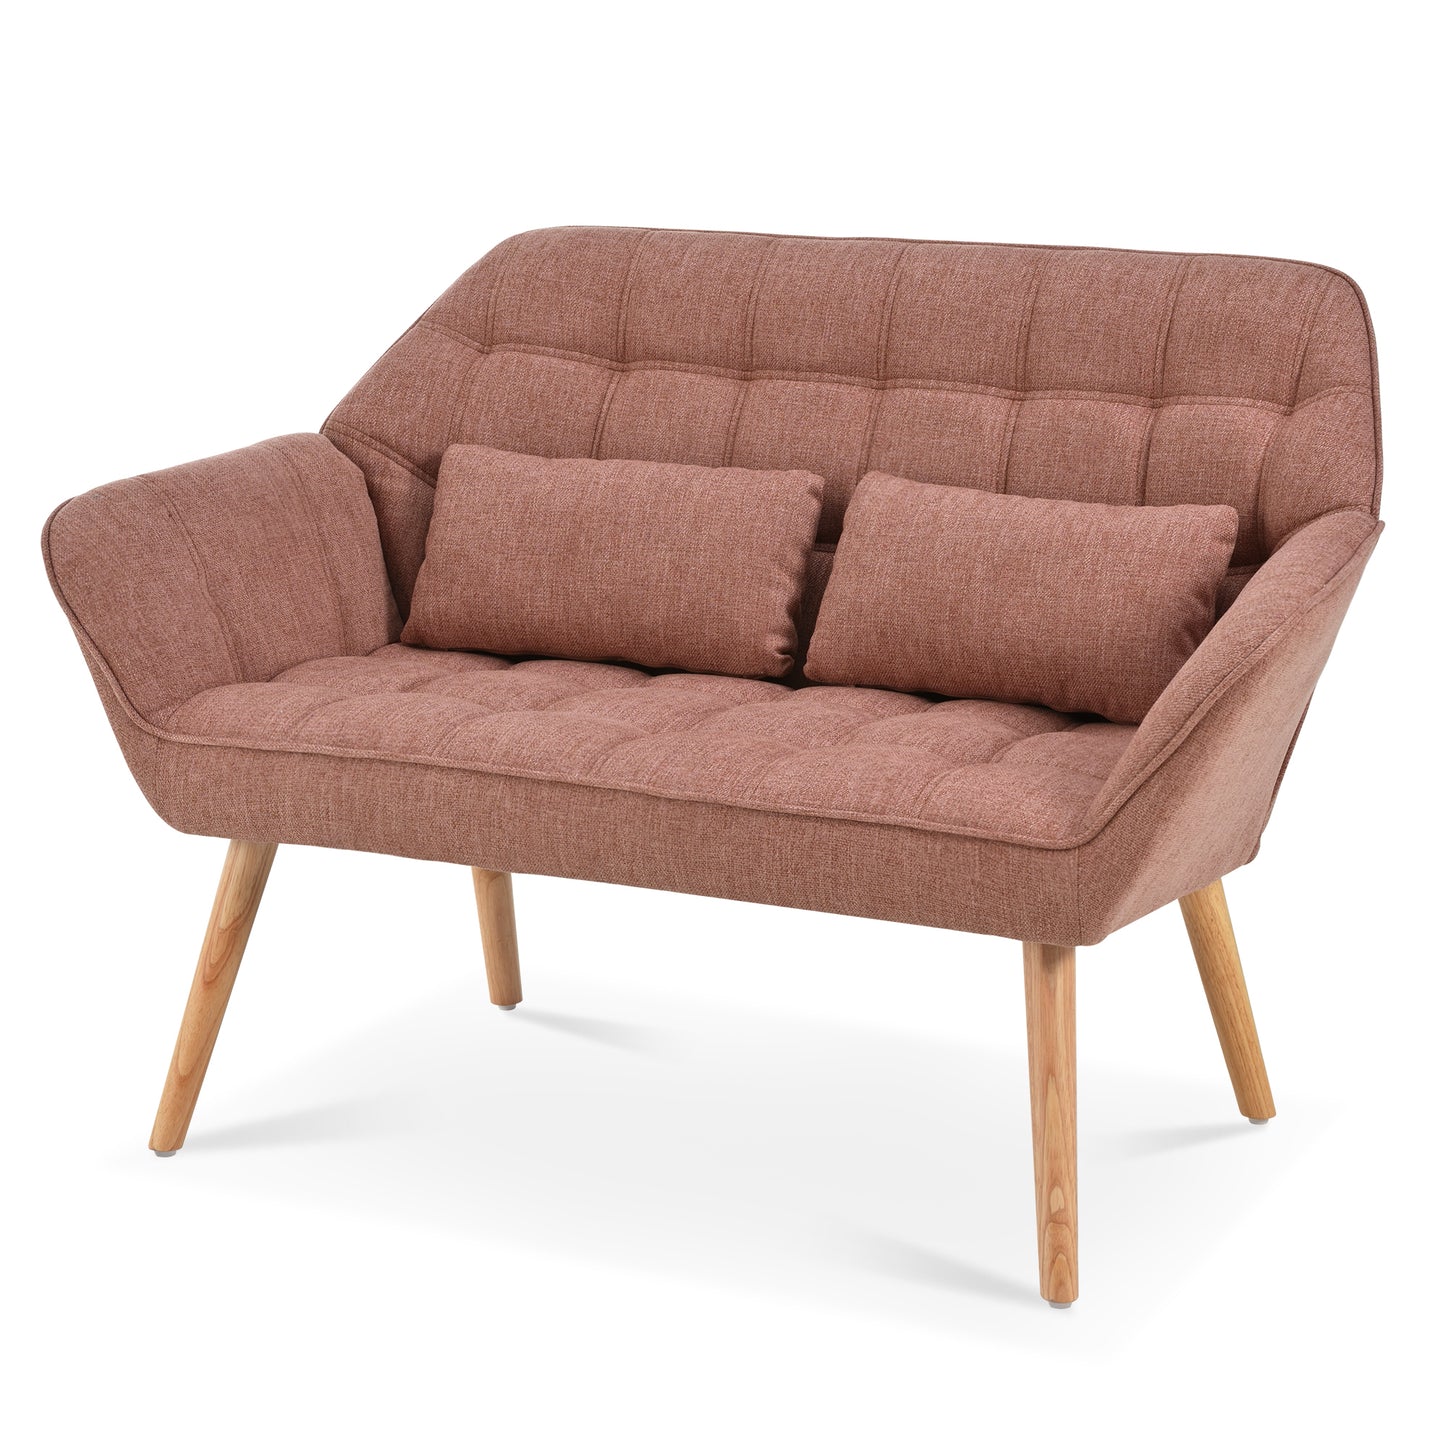 50 "width Loveseat sofa - Ergonomic with pillow